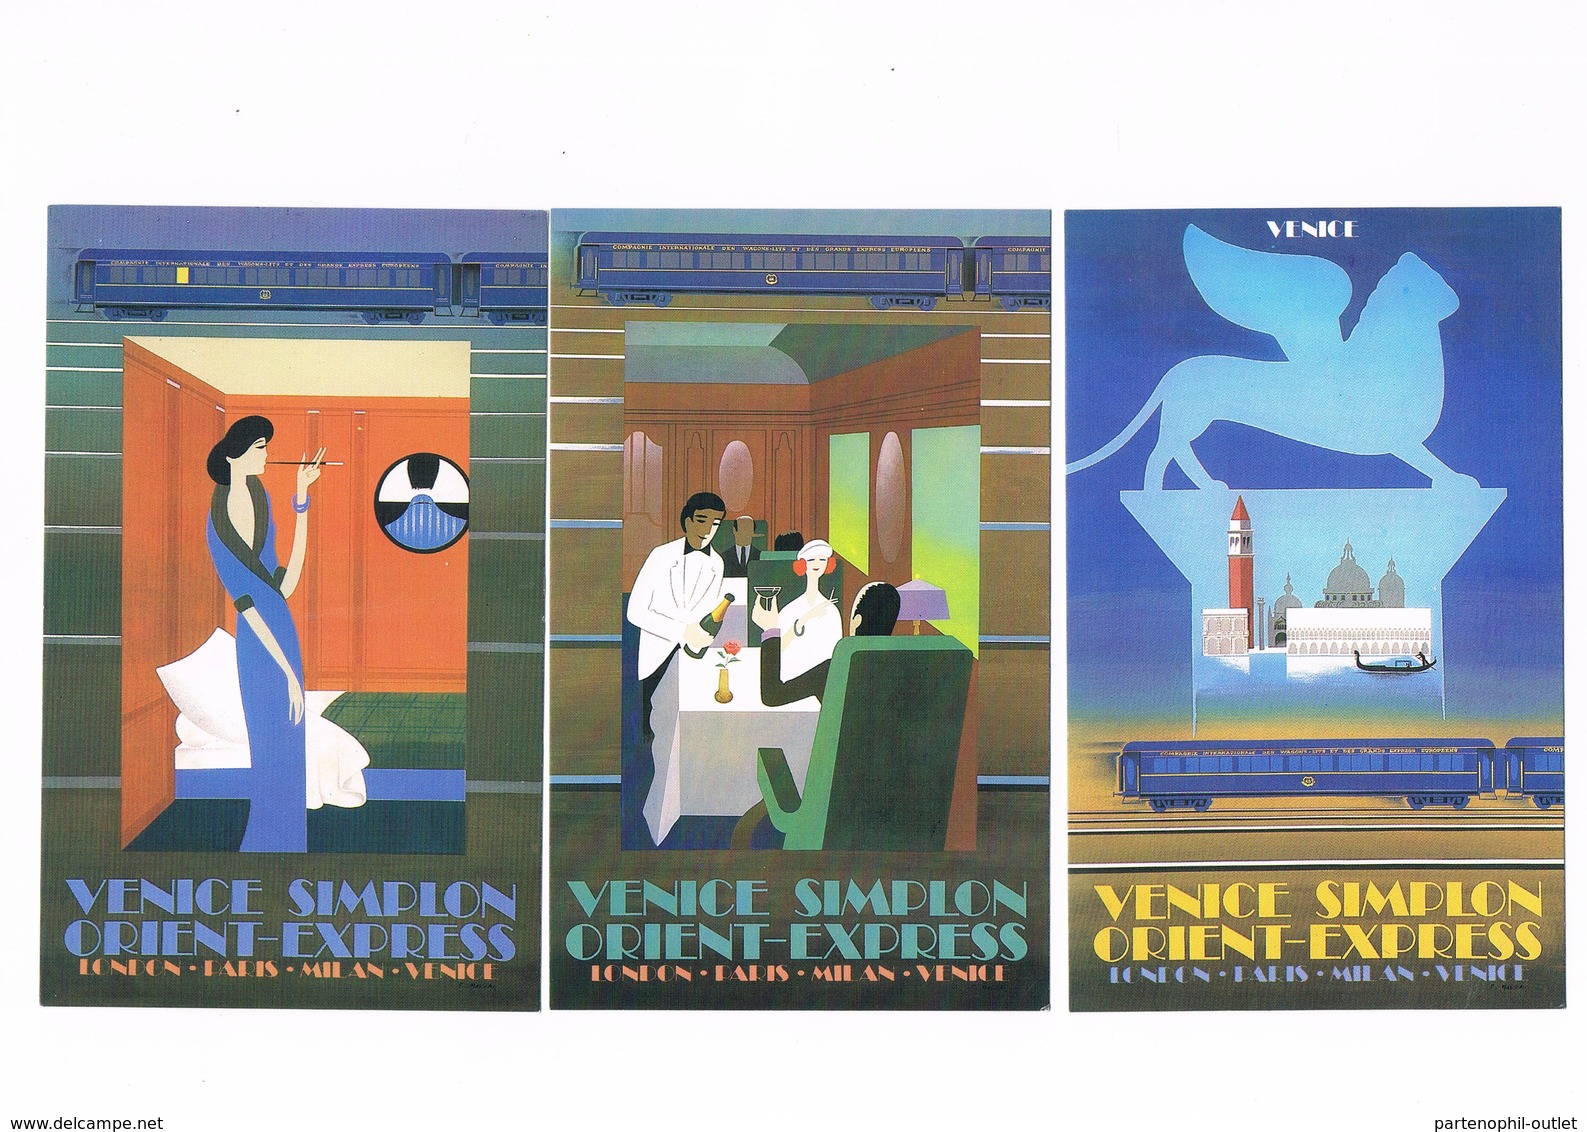 Cartolina - Postcard - Non Viaggiata/Unsent - Venice Simplon Orient-Express - N.6 Cartoline (Pierre Fix-Masseau) - Treni